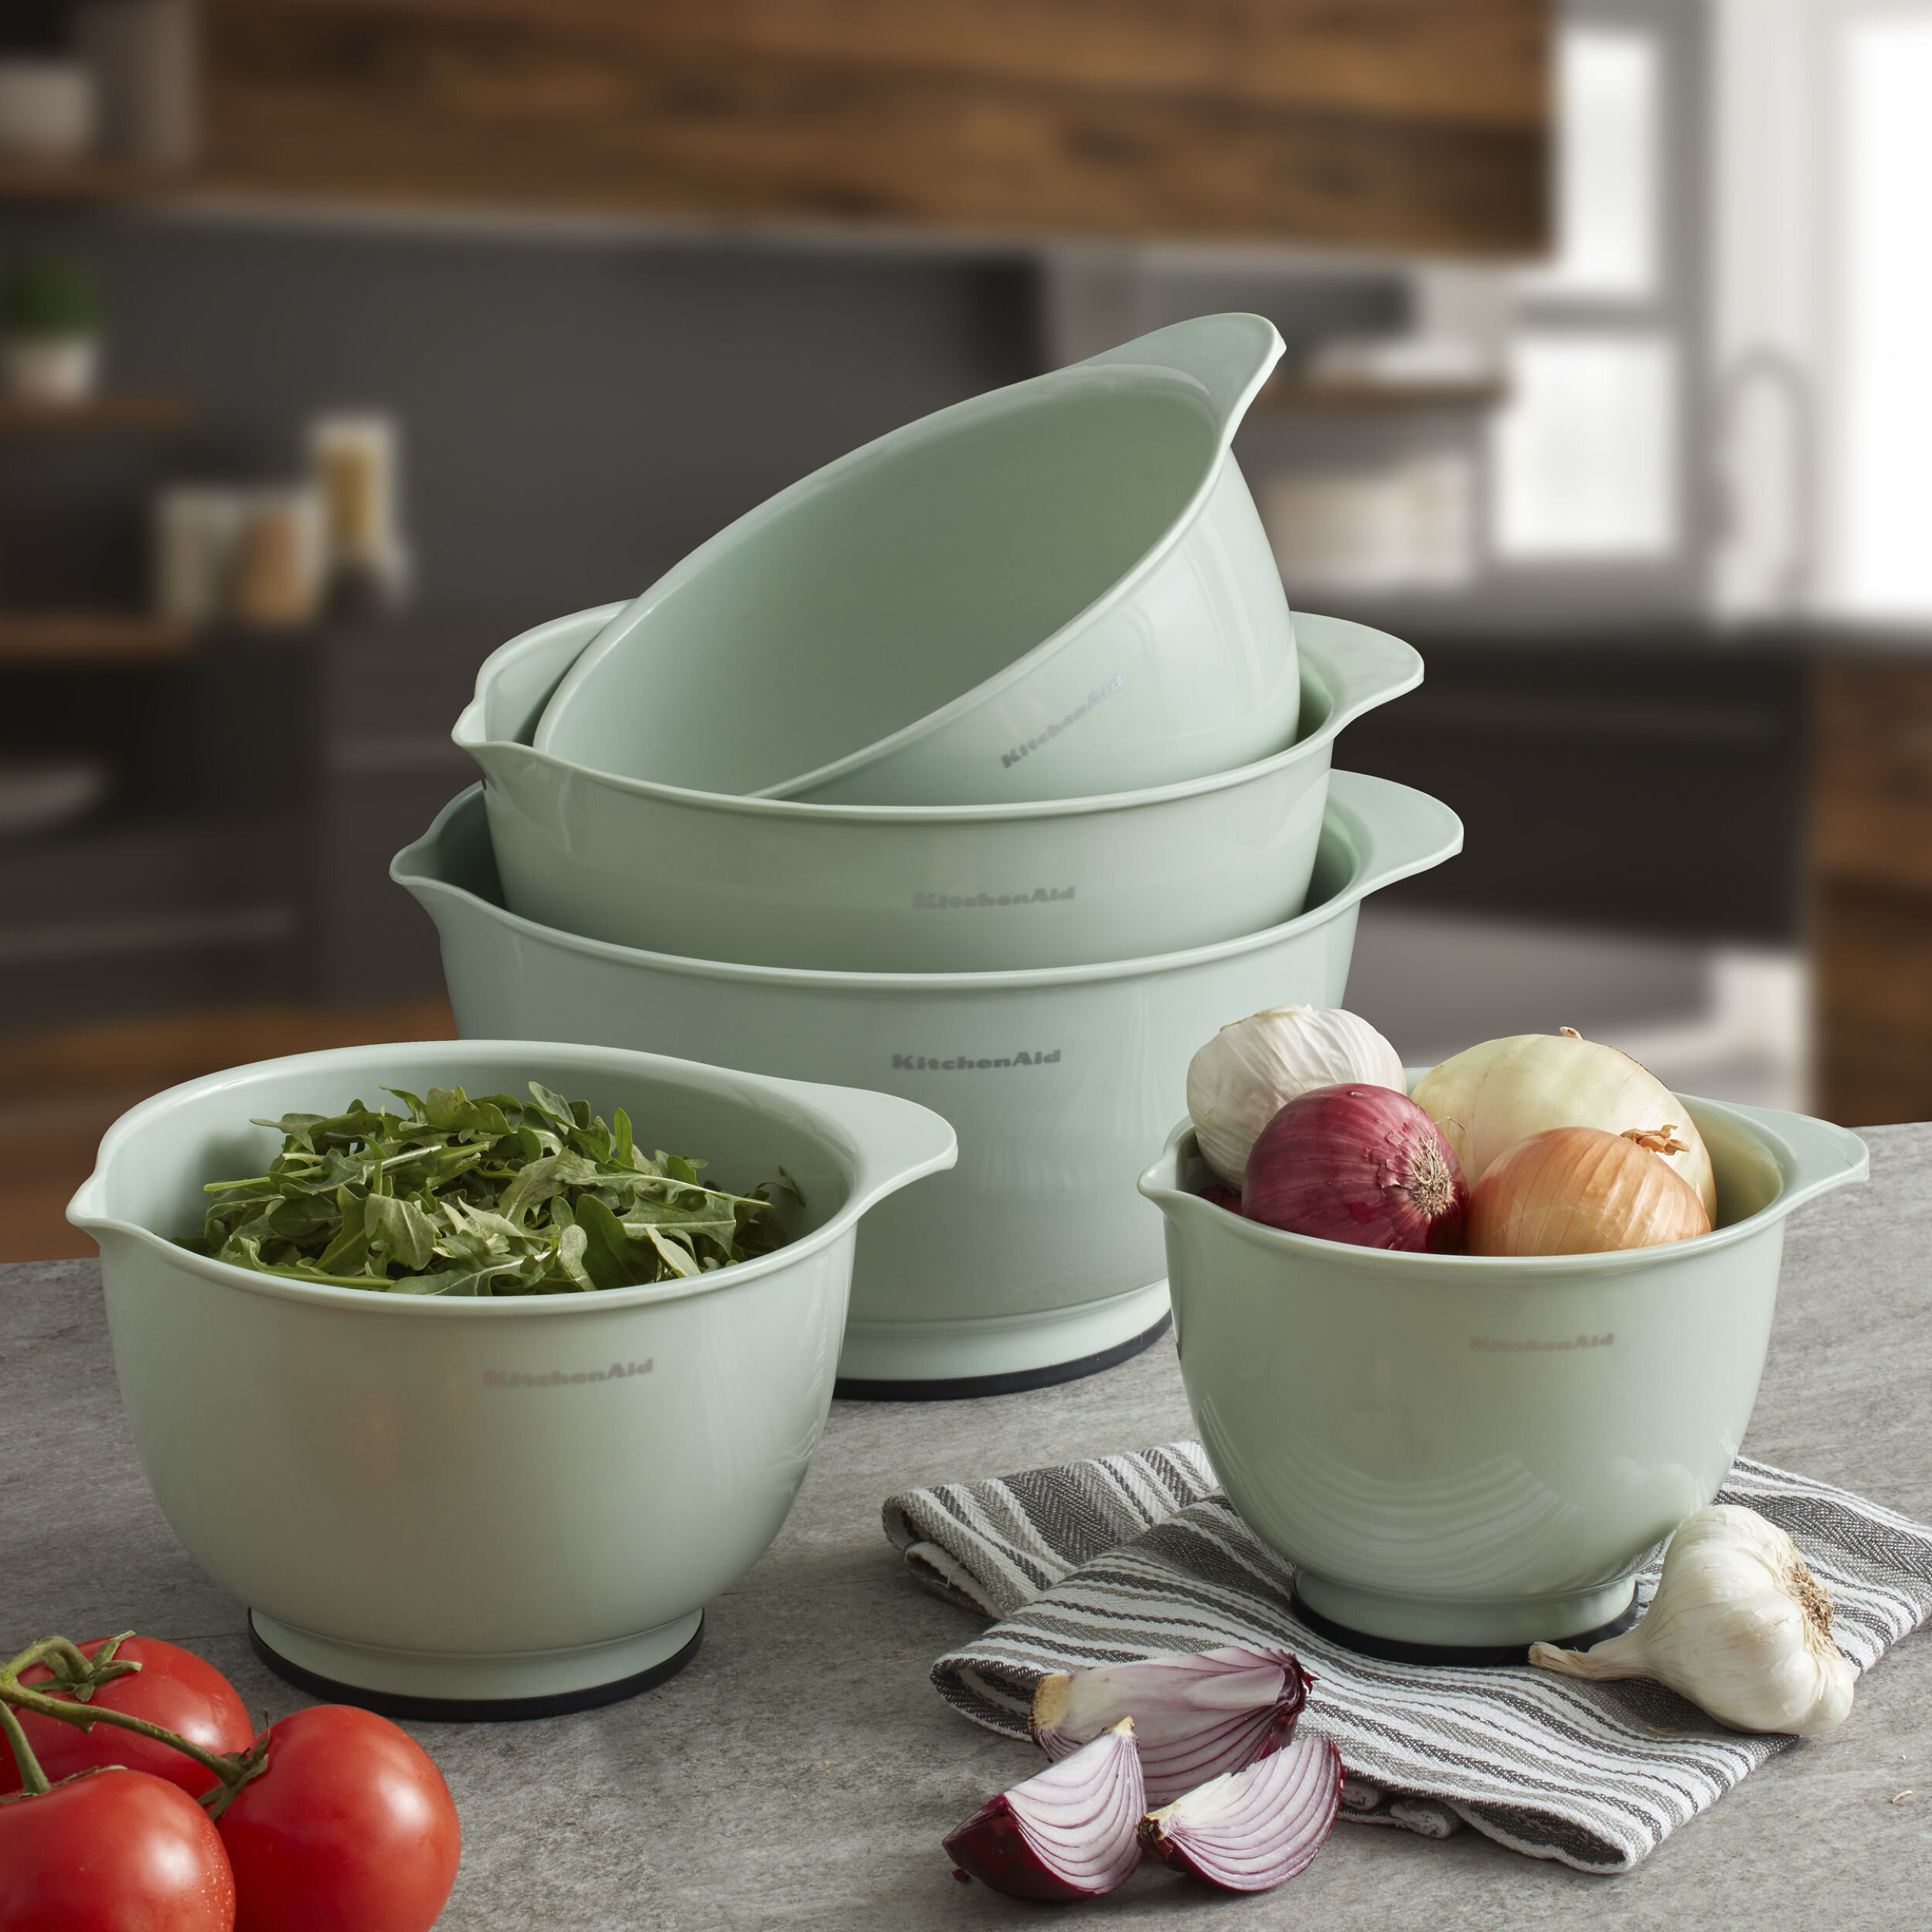 KitchenAid Set of 5 Mixing Bowls - Pistachio